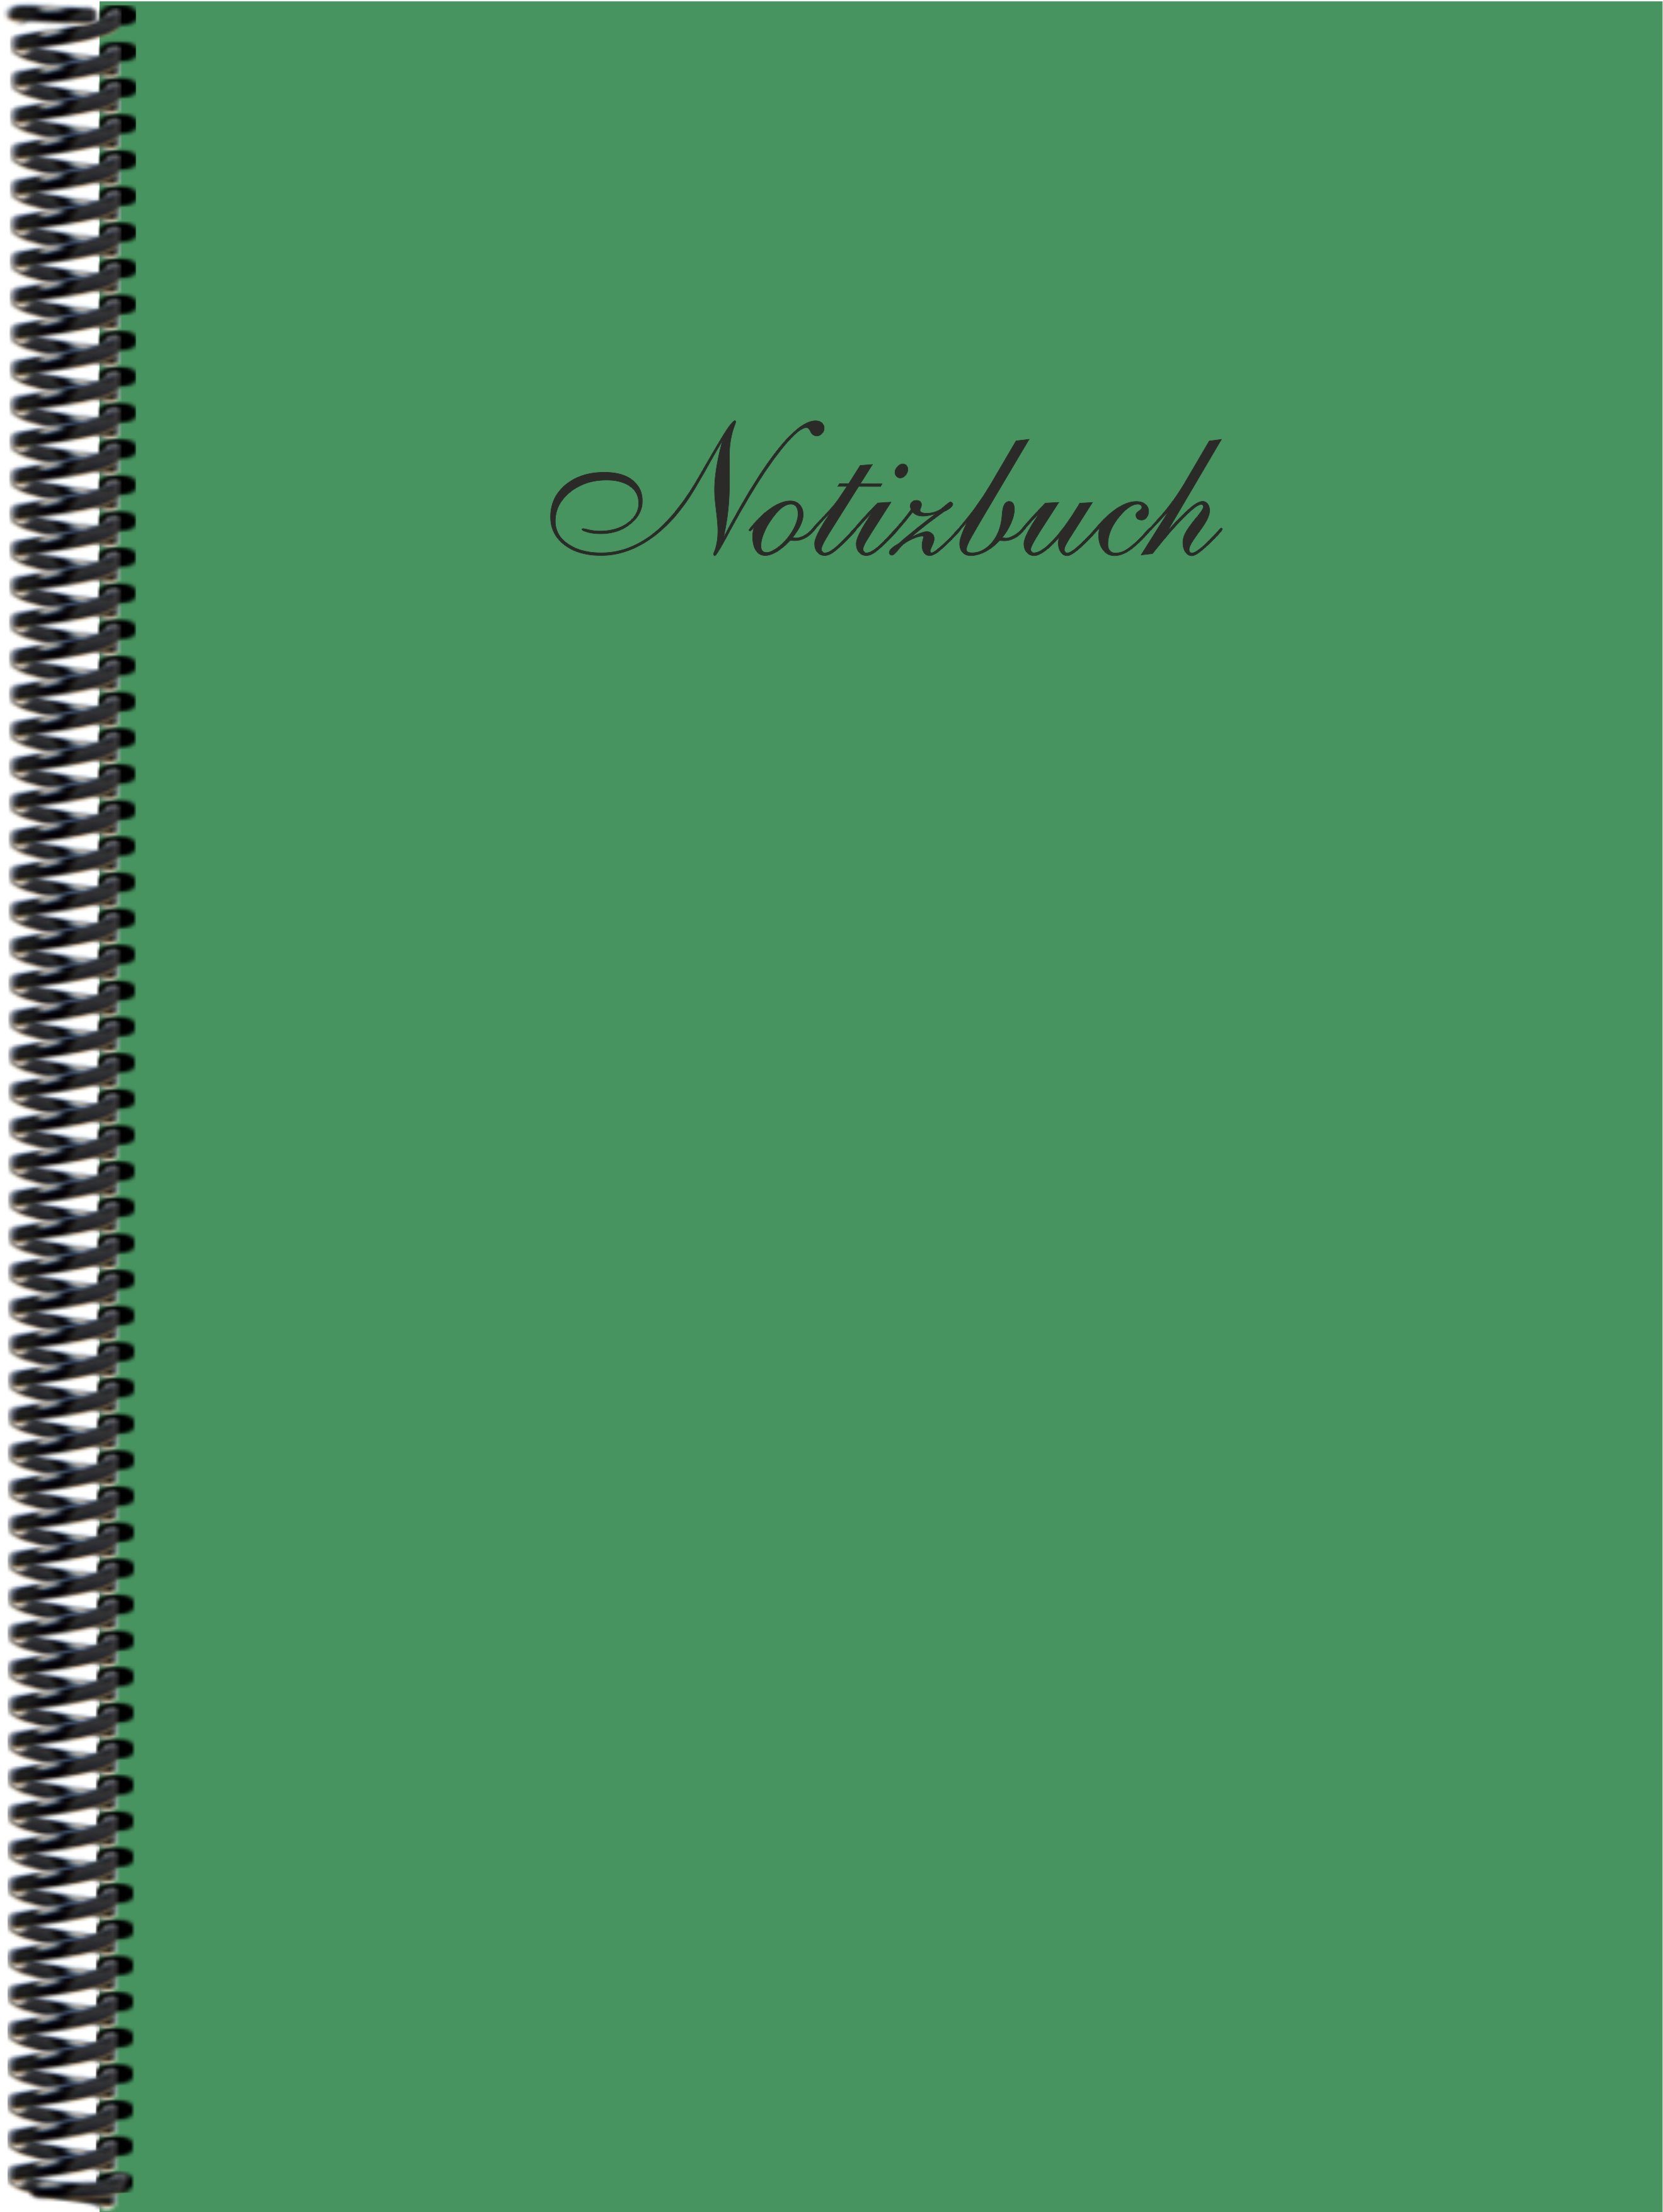 Gmbh der Trendfarbe blanko, E&Z in DINA4 moosgrün Verlag Notizbuch Notizbuch